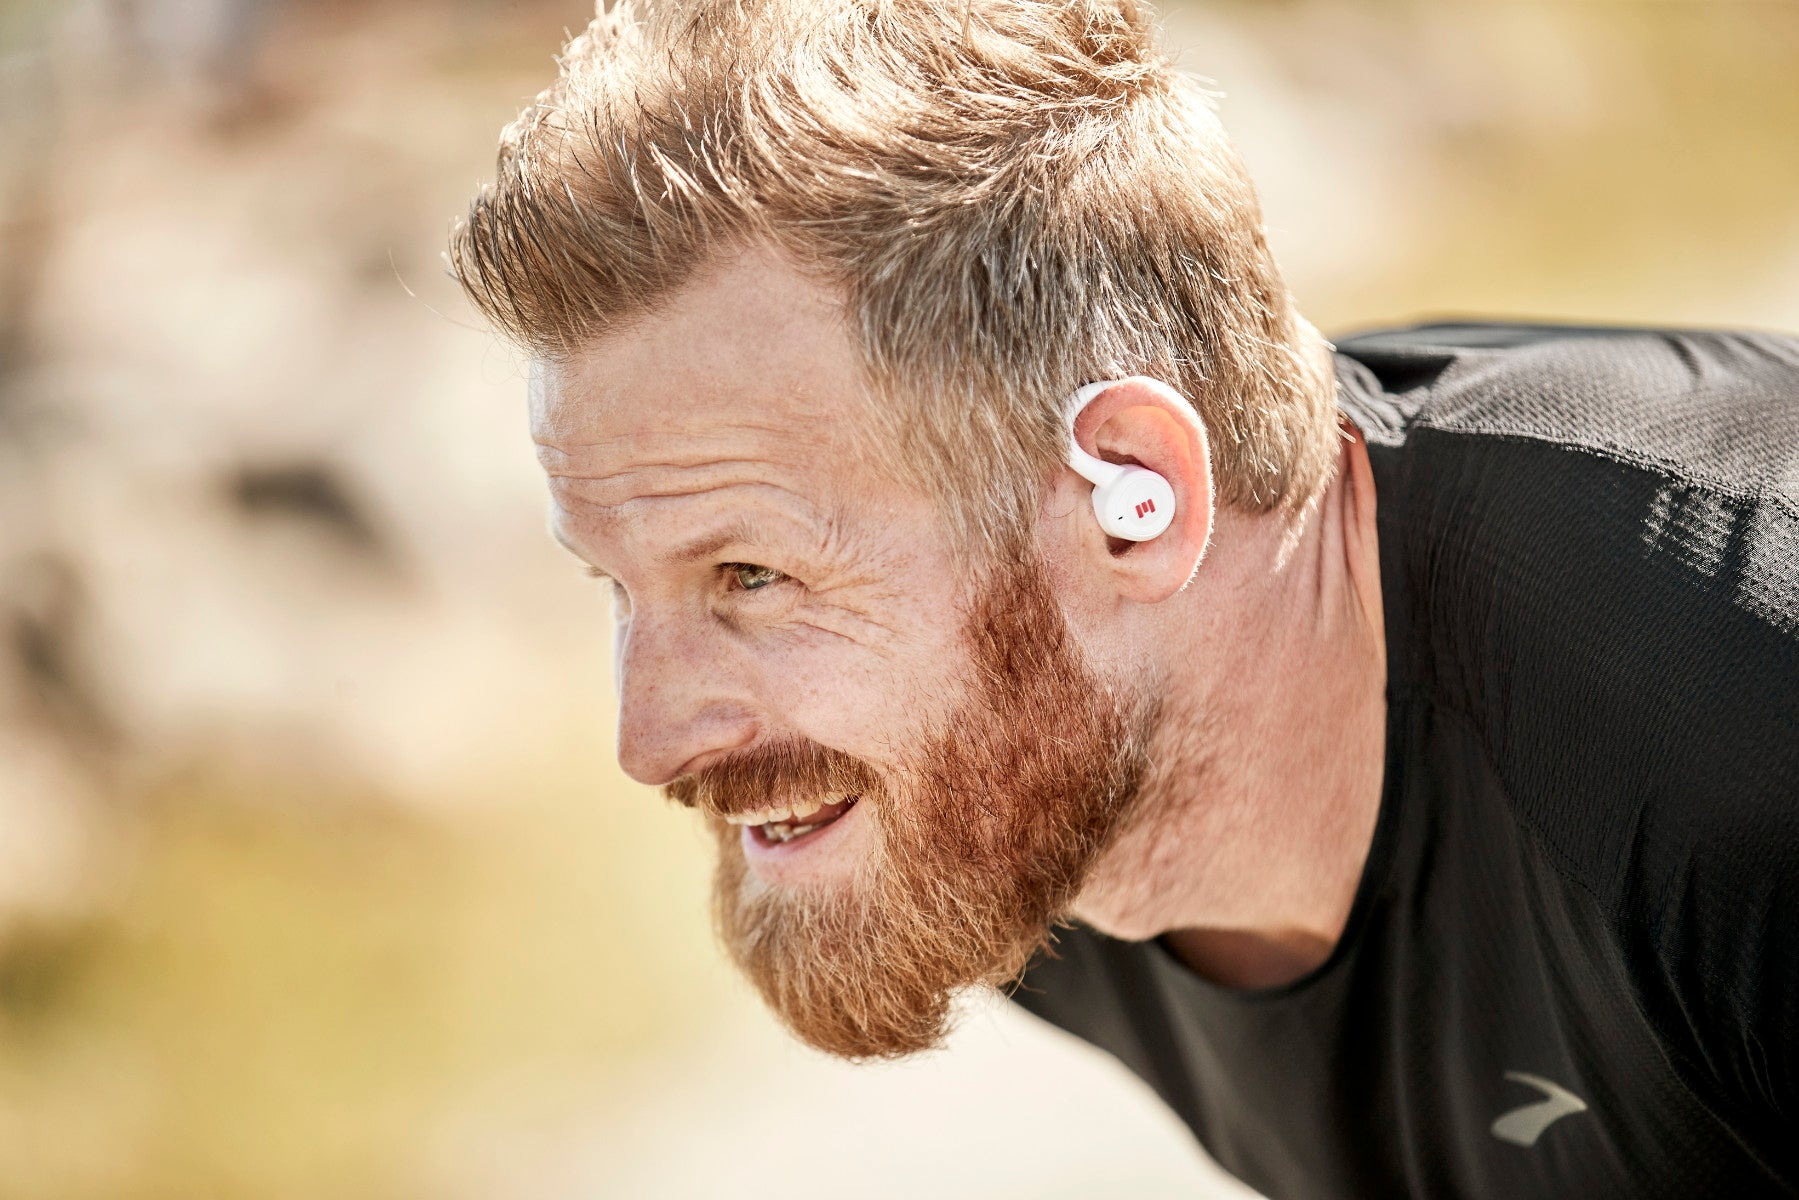 MIIEGO MiiBUDS In-ear In-Ear White Arctic Bluetooth II, Kopfhörer ACTION